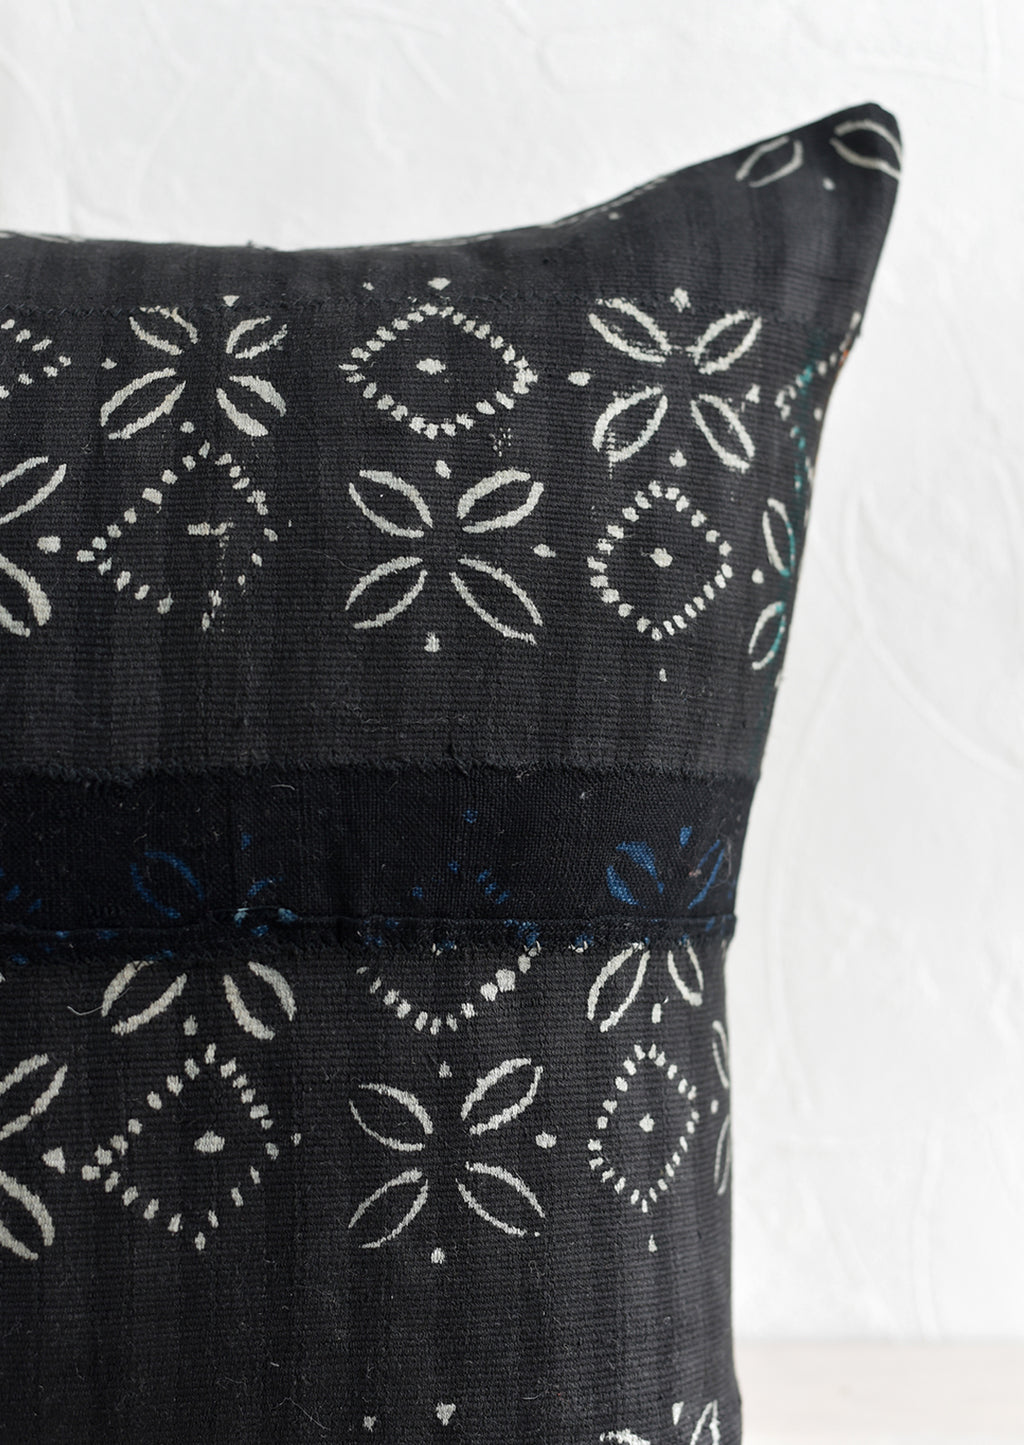 3: Batik strip cloth fabric in dark color with light print.